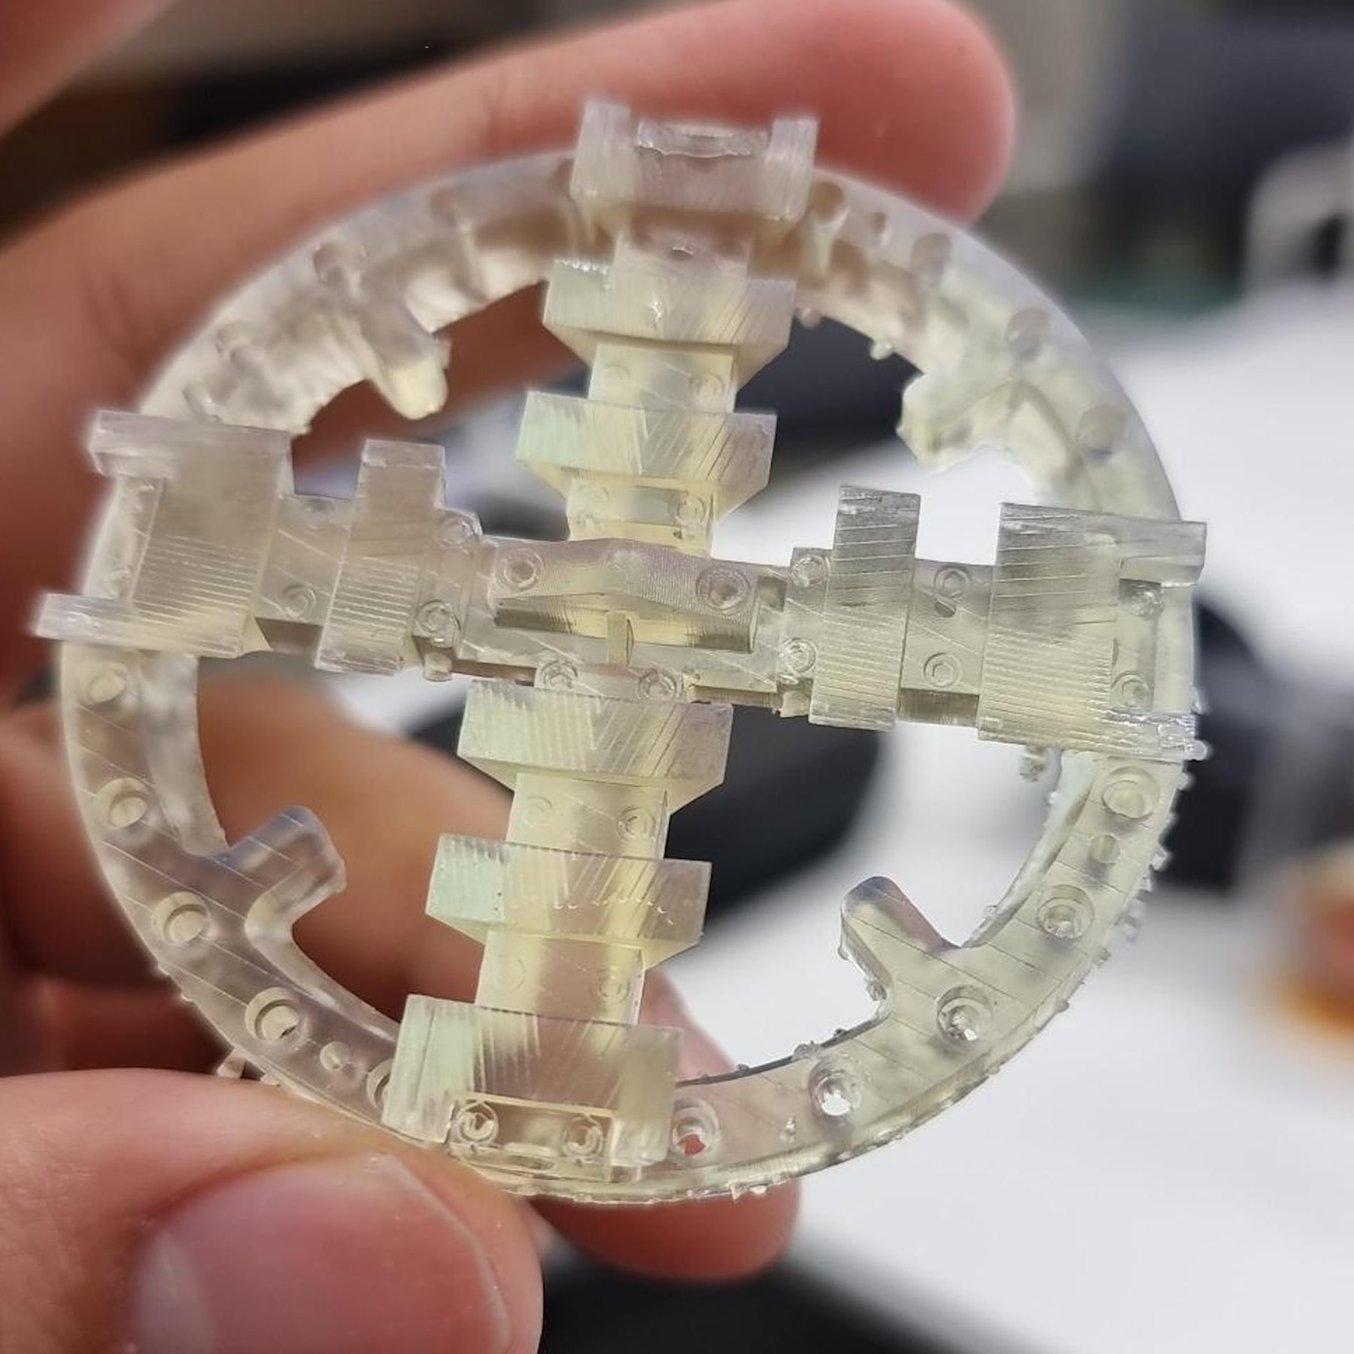 3D printed miniature of the tunnel boring machine cutting wheel